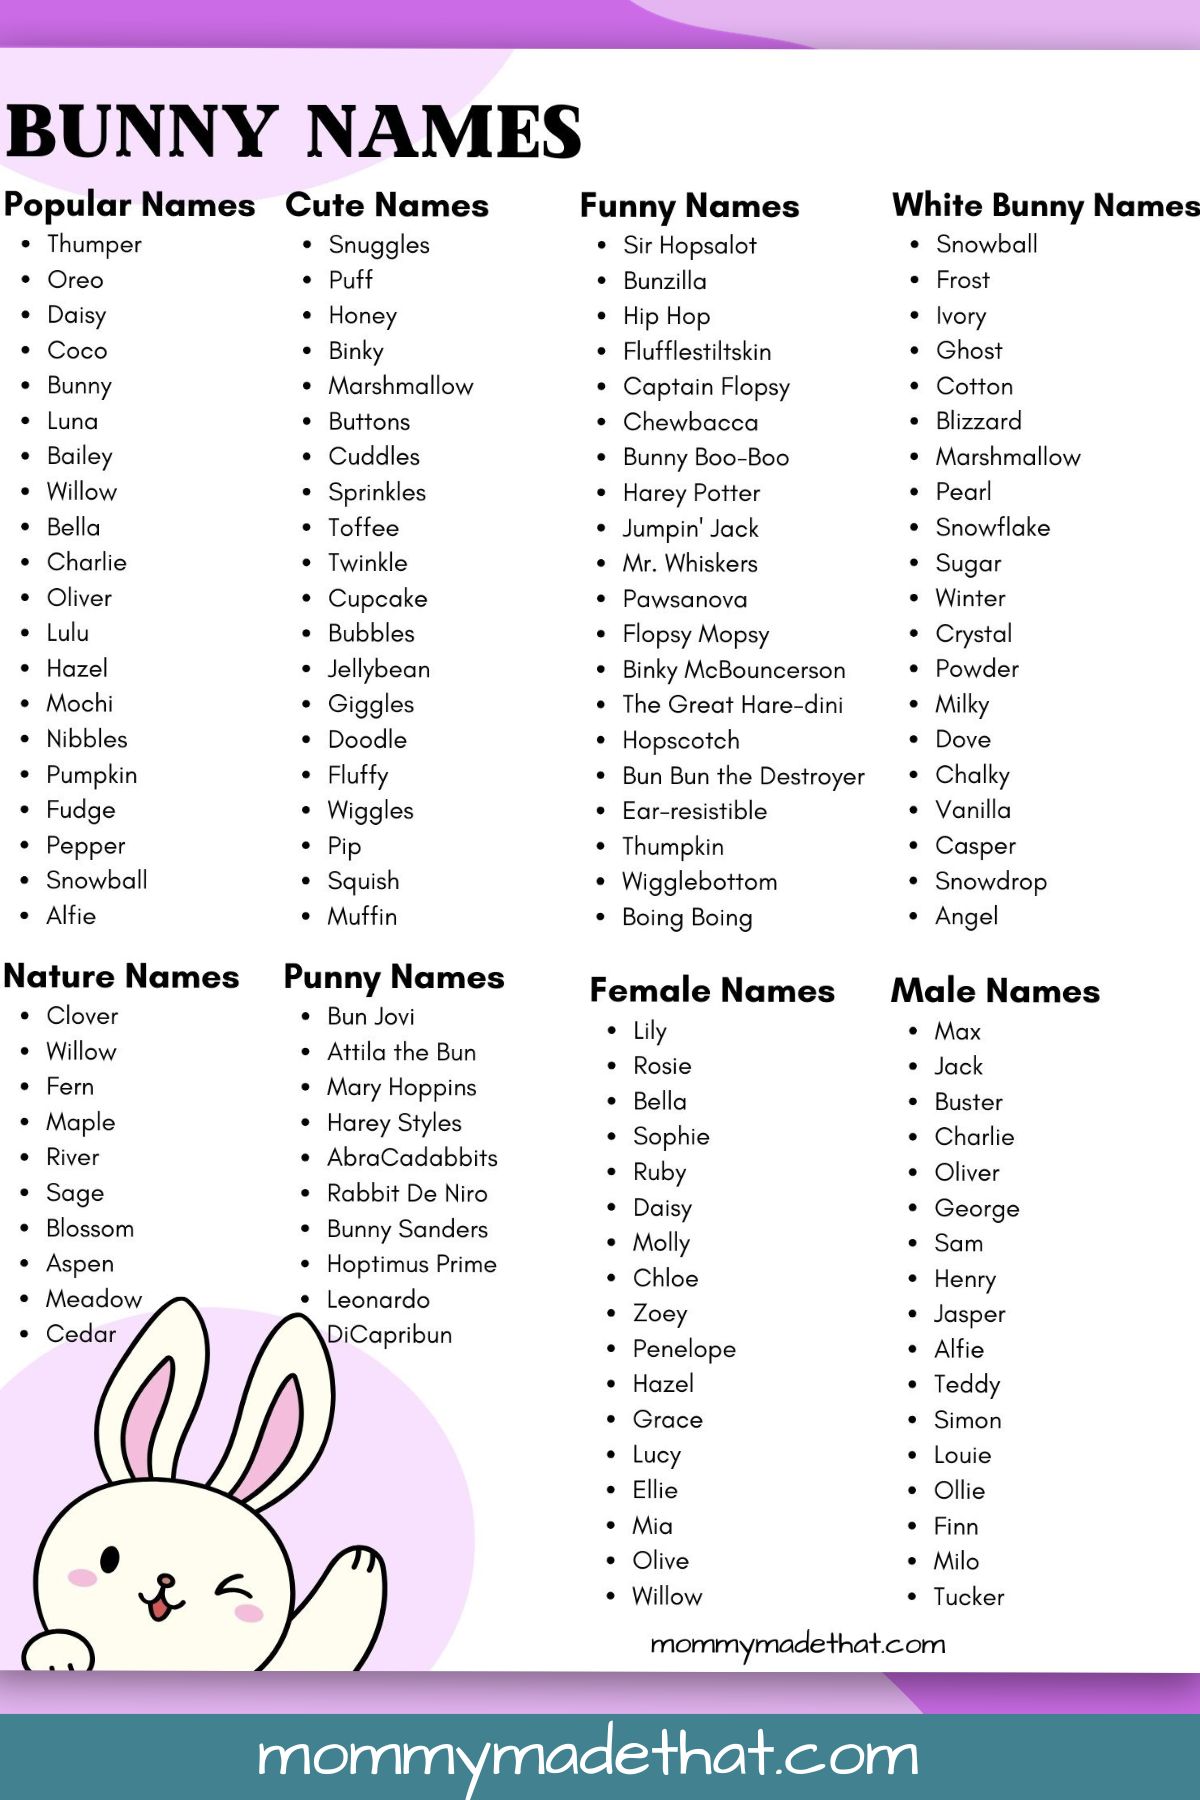 Bunny names.